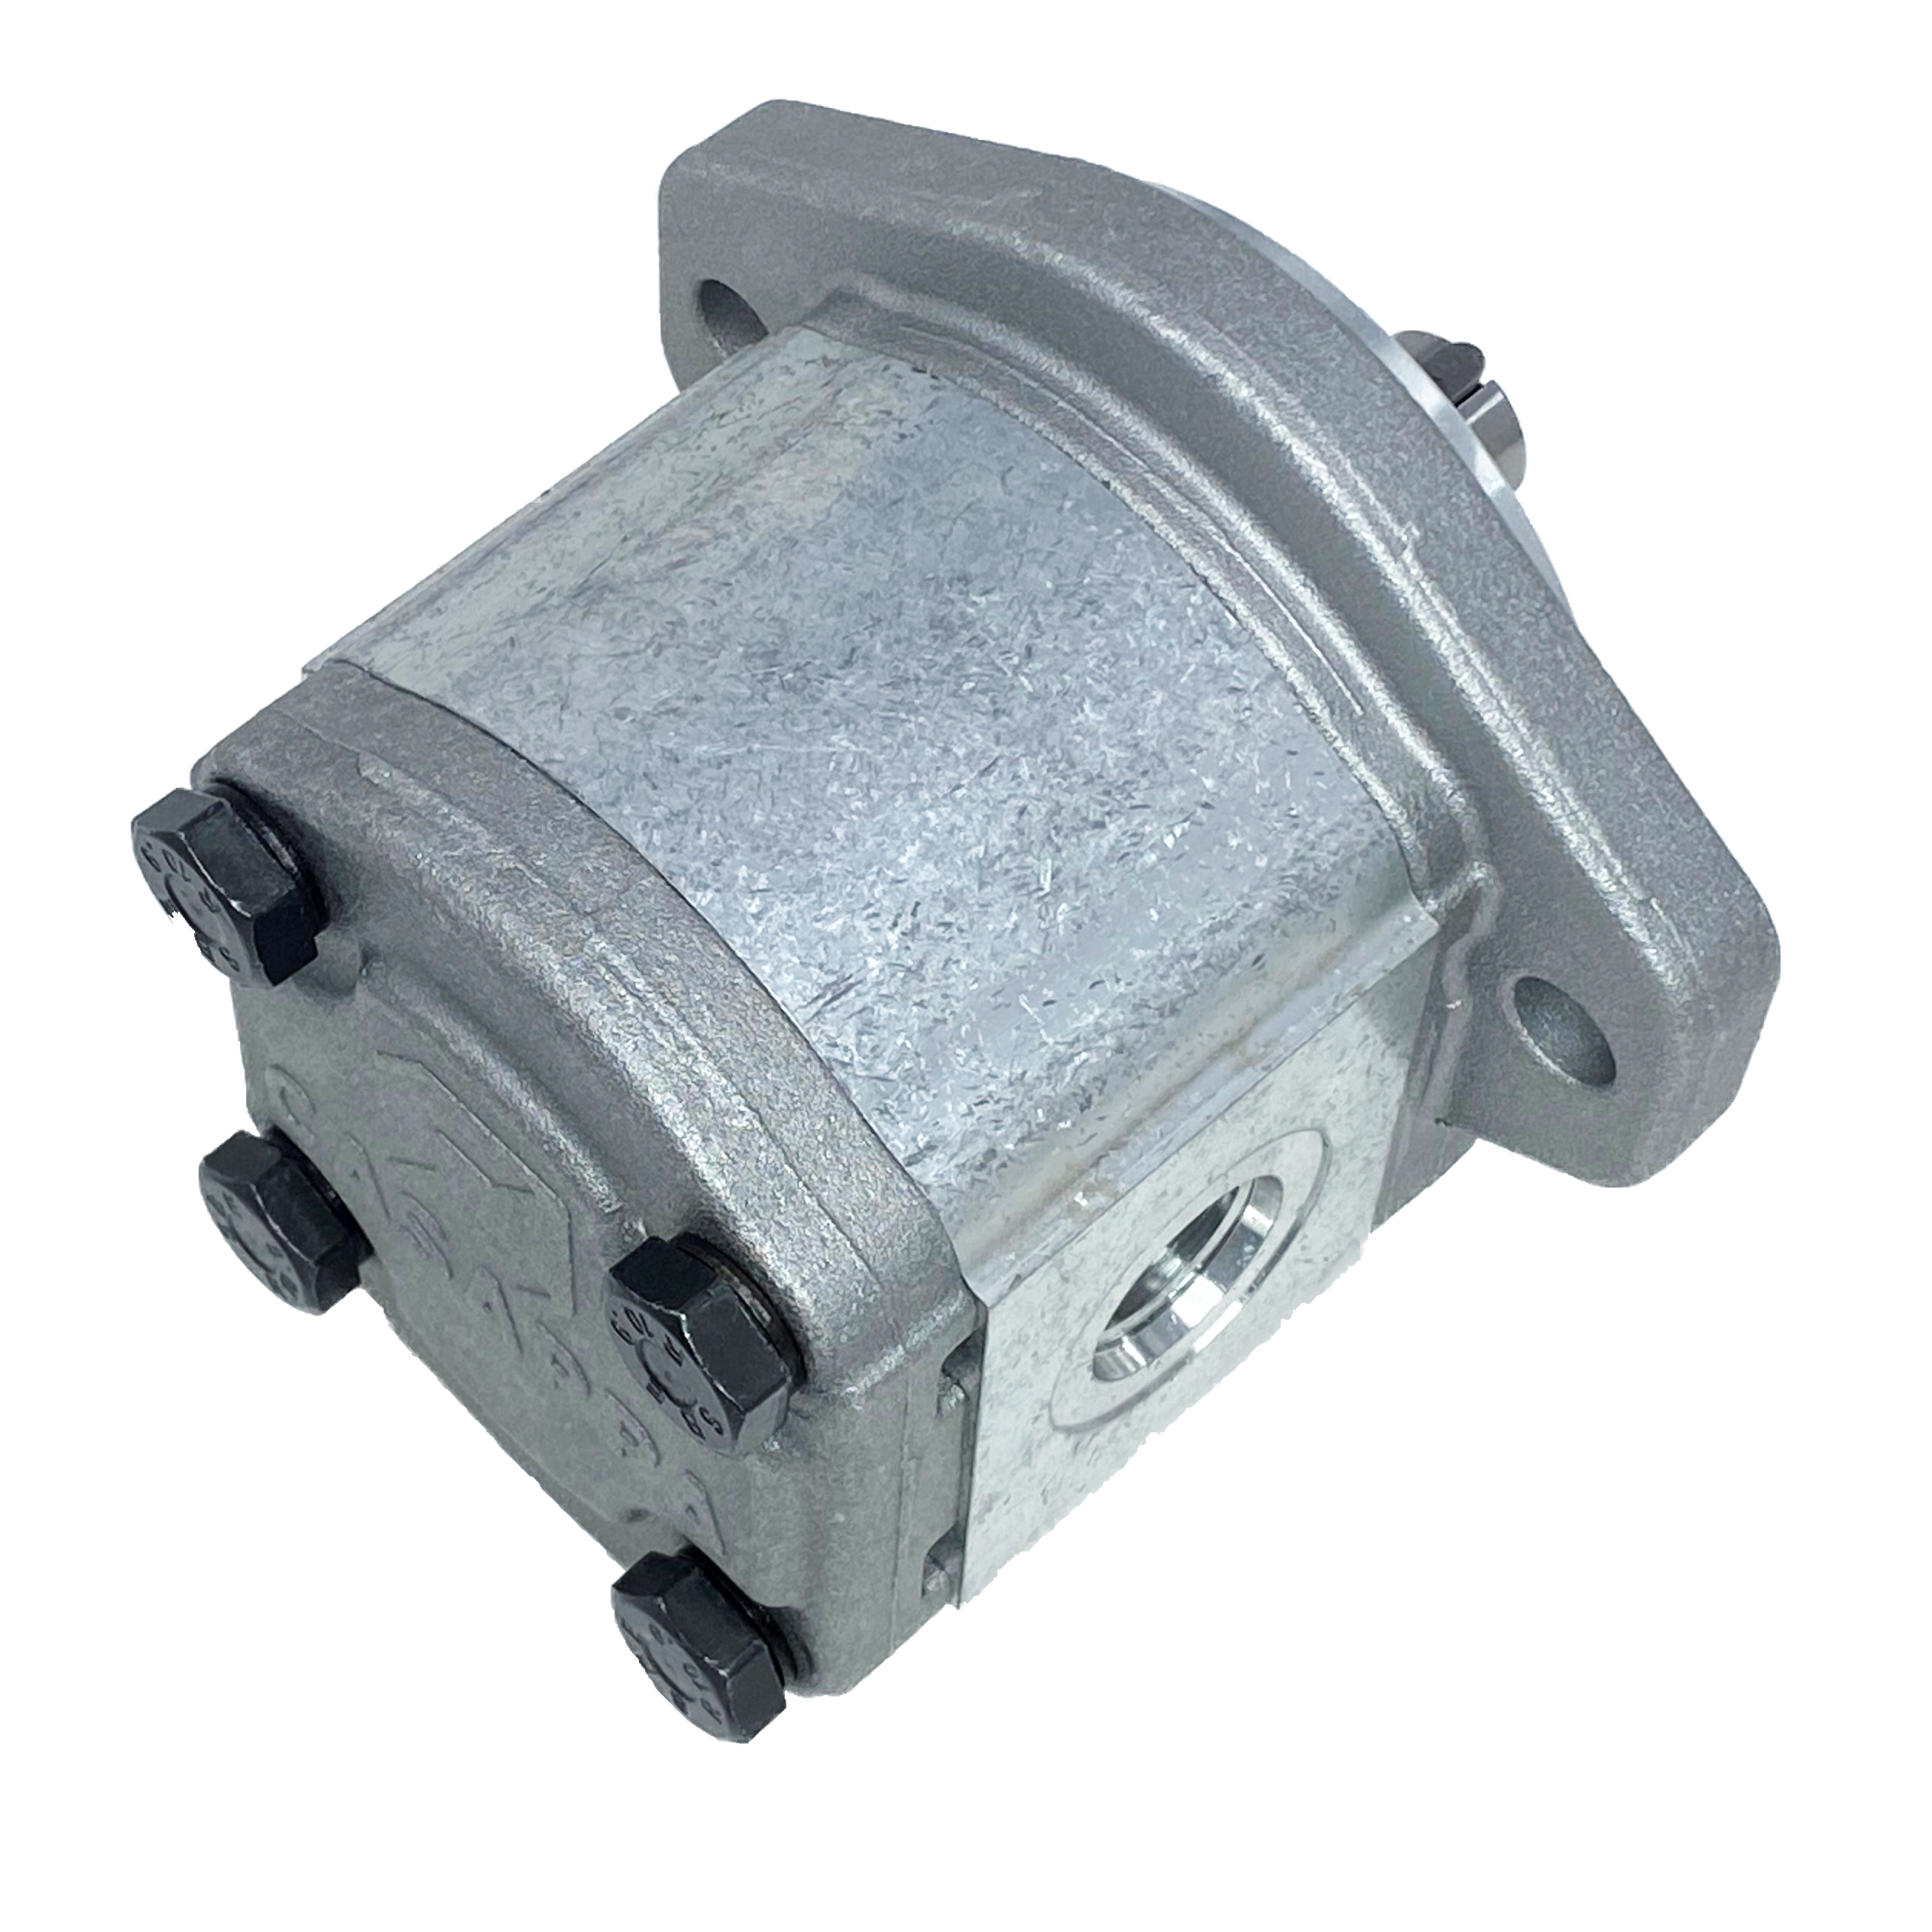 PLM20.4B0-50S1-LOC/OC-N-EL : Casappa Polaris Gear Motor, 4.95cc, 3625psi Rated, 4000RPM, Reversible Interior Drain, 3/4" Bore x 3/16" Key Shaft, SAE A 2-Bolt Flange, 0.625 (5/8") #10 SAE Inlet, 0.625 (5/8") #10 SAE Outlet, Aluminum Body & Flange